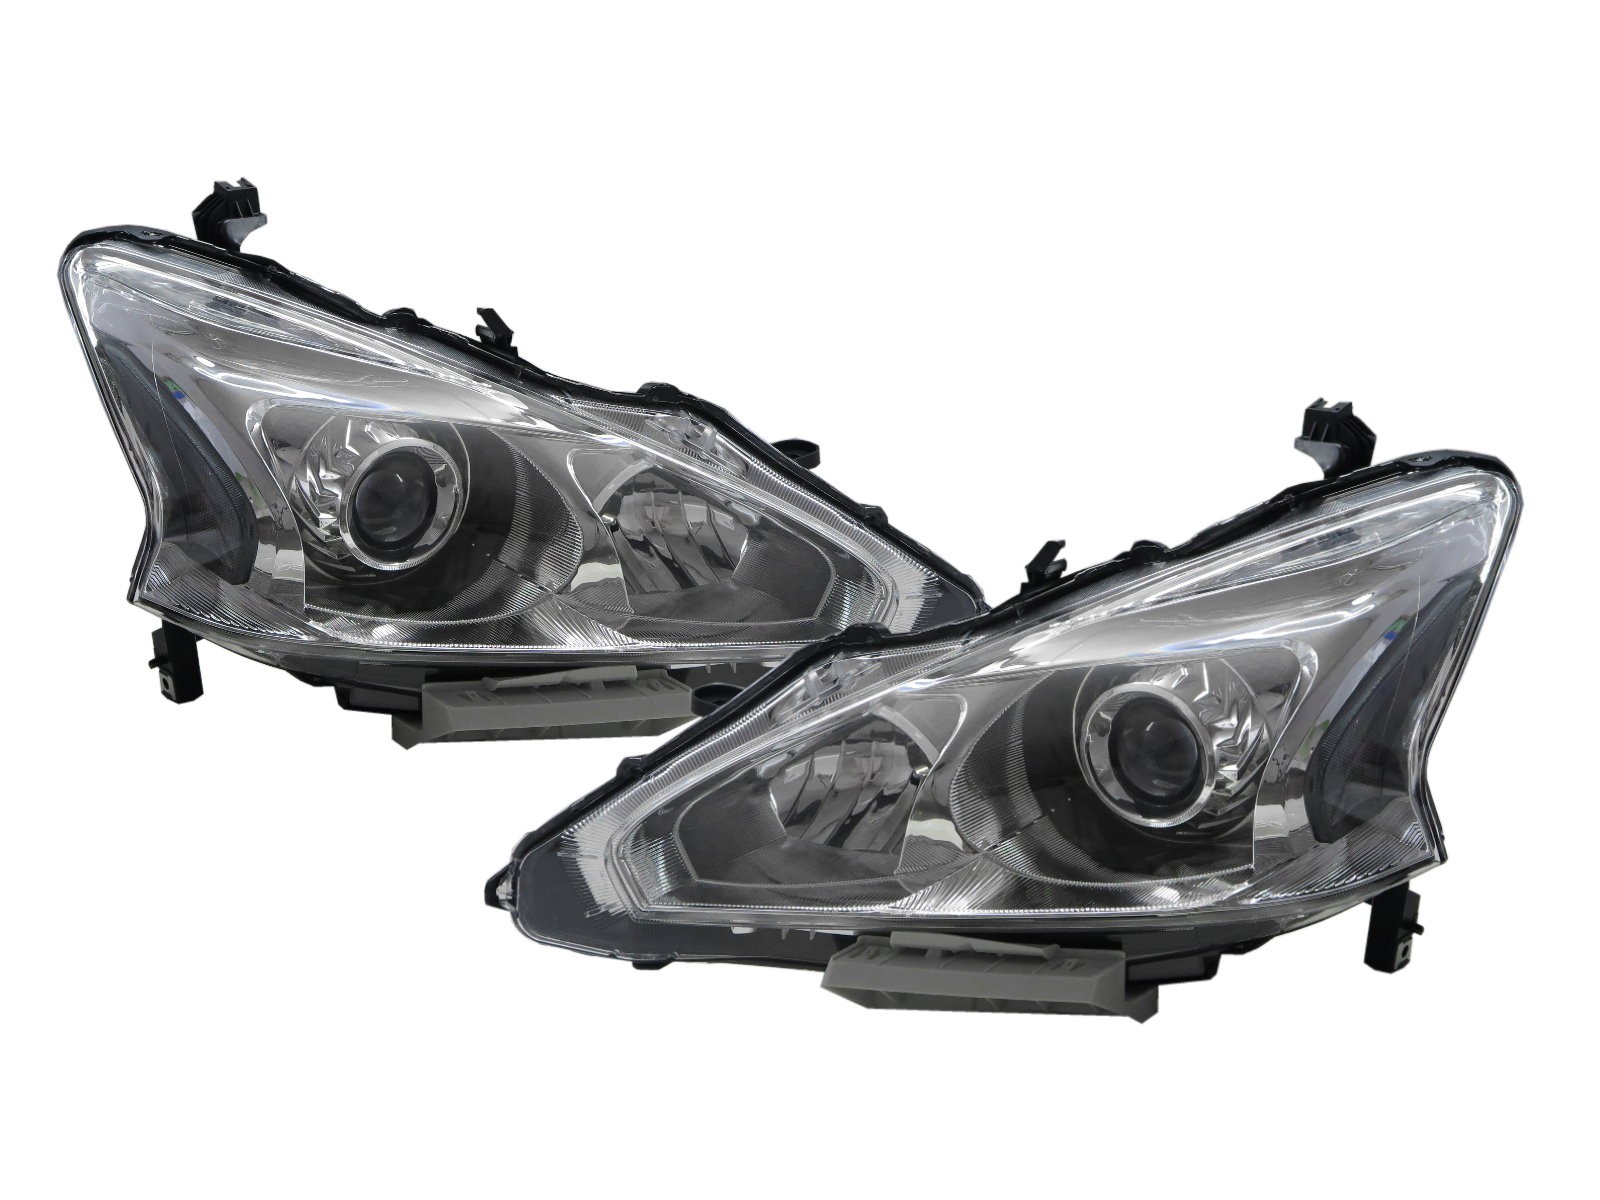 CrazyTheGod Teana L33 Fifth generation 2013-2015 PRE-FACELIFT Sedan 4D Projector Headlight Headlamp W/ Motor Chrome for NISSAN LHD